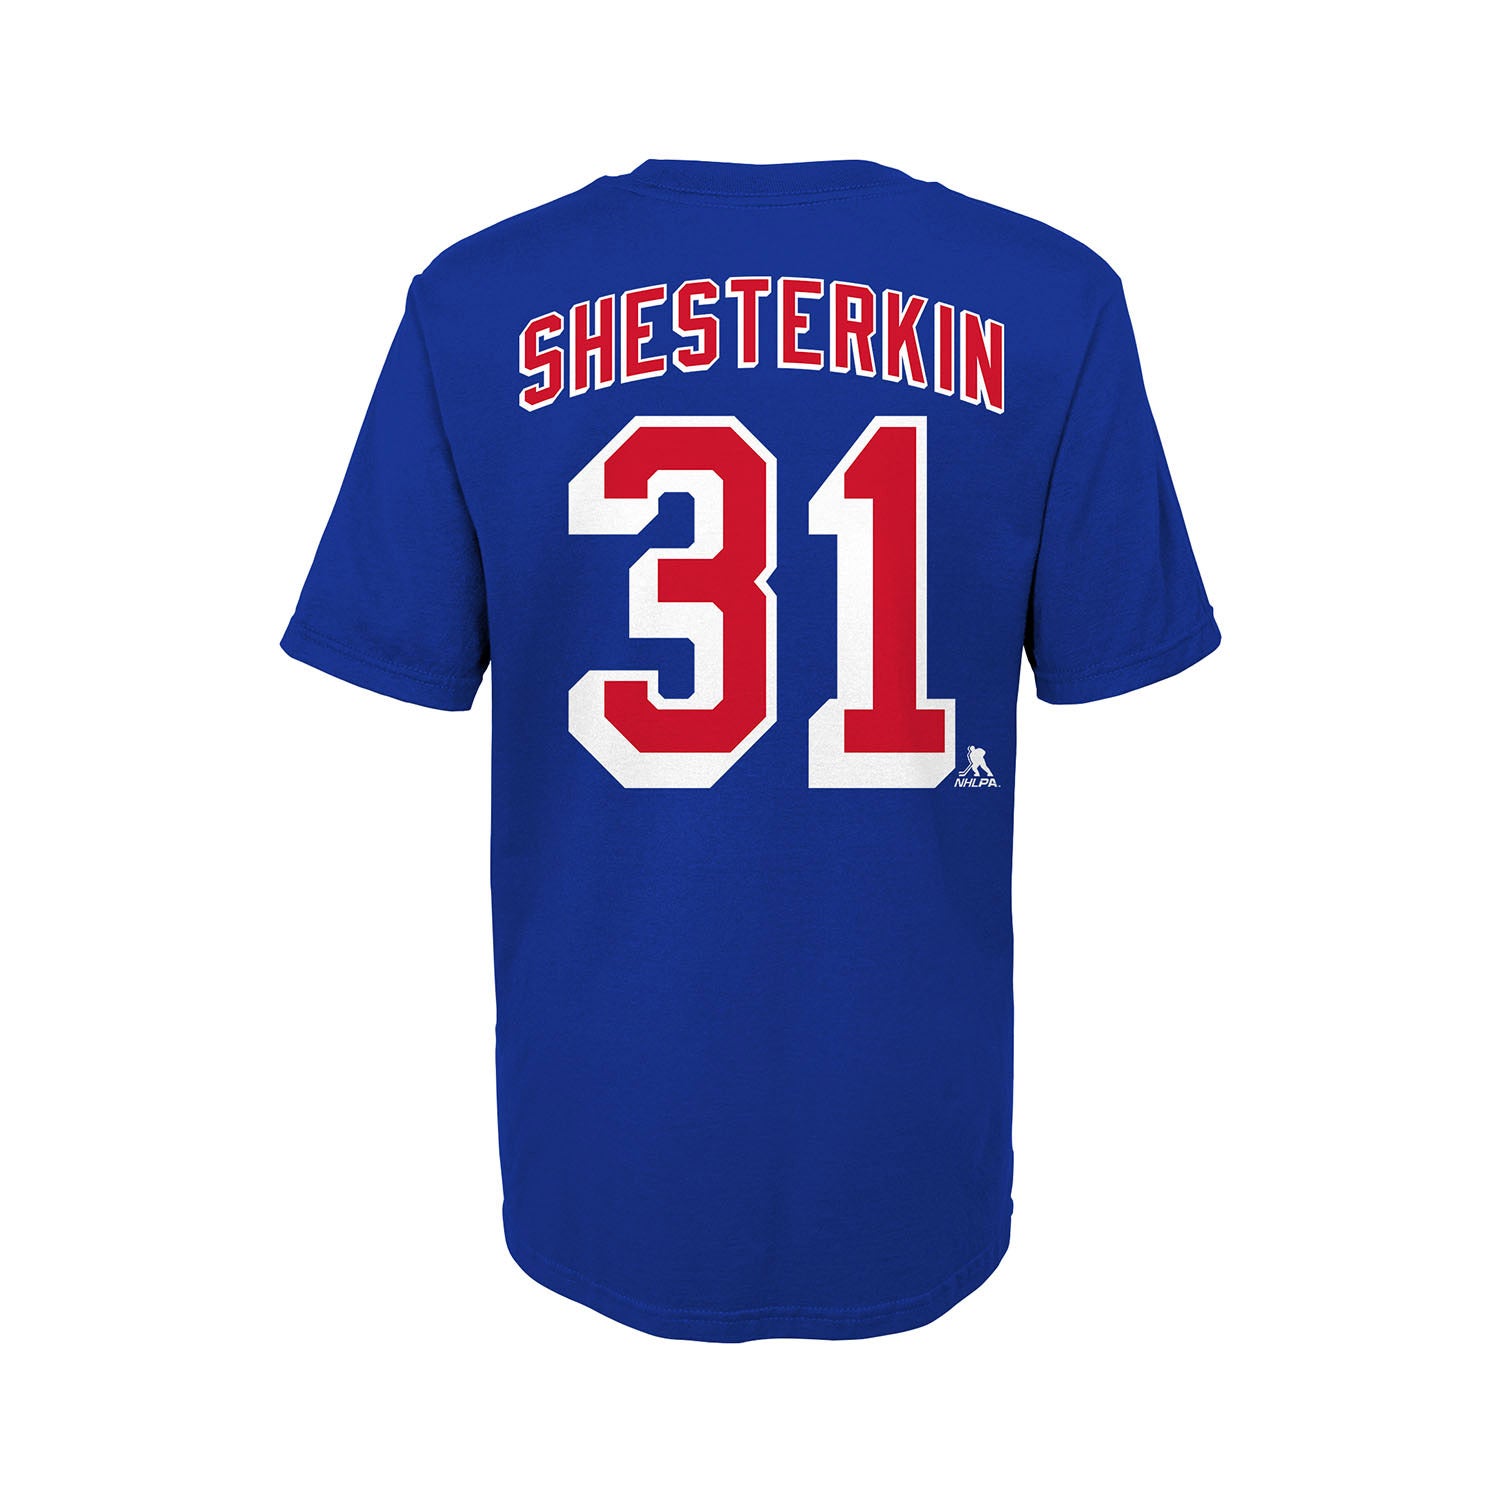 Igor Shesterkin Signed New York Rangers Jersey